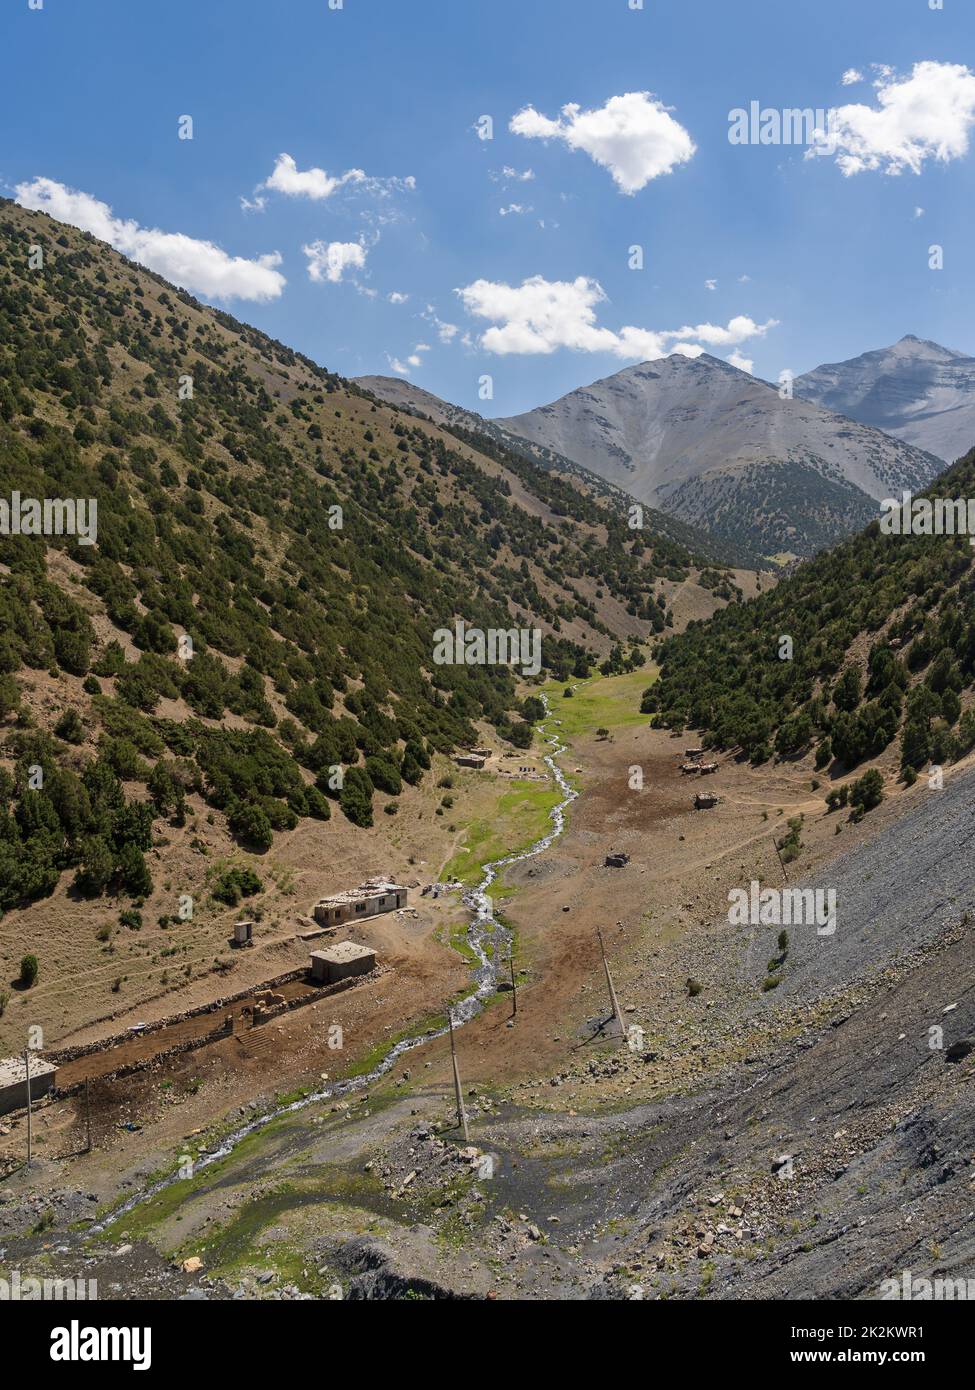 Scenic rural landscape of agricultural valley in the Turkestan mountain range near Shakhristan tunnel, Sughd region, Tajikistan Stock Photo